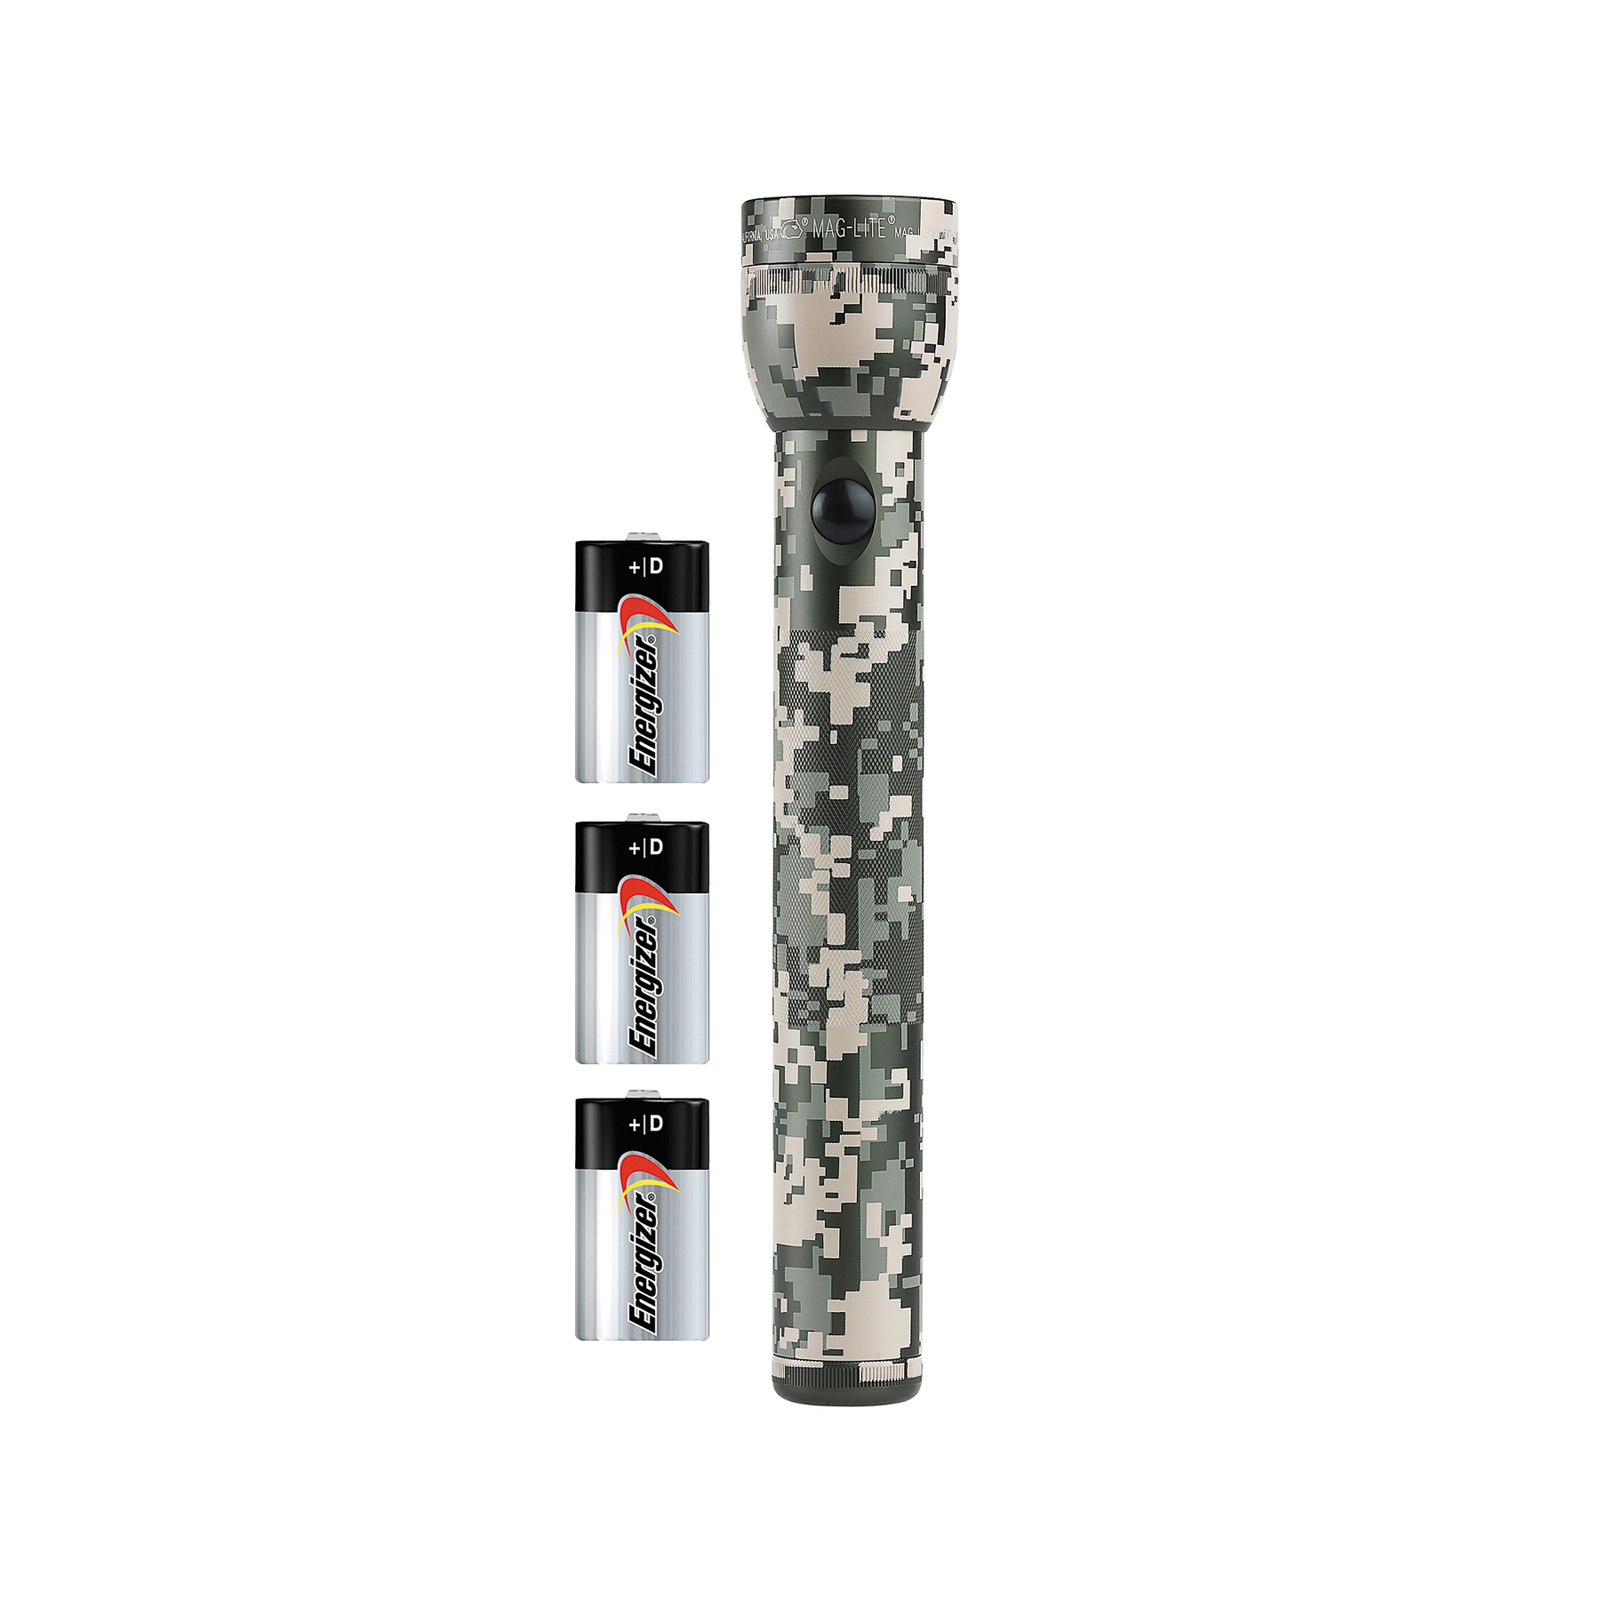 Maglite Xenon-Taschenlampe S3DMR, 3-Cell D, Box, camouflage